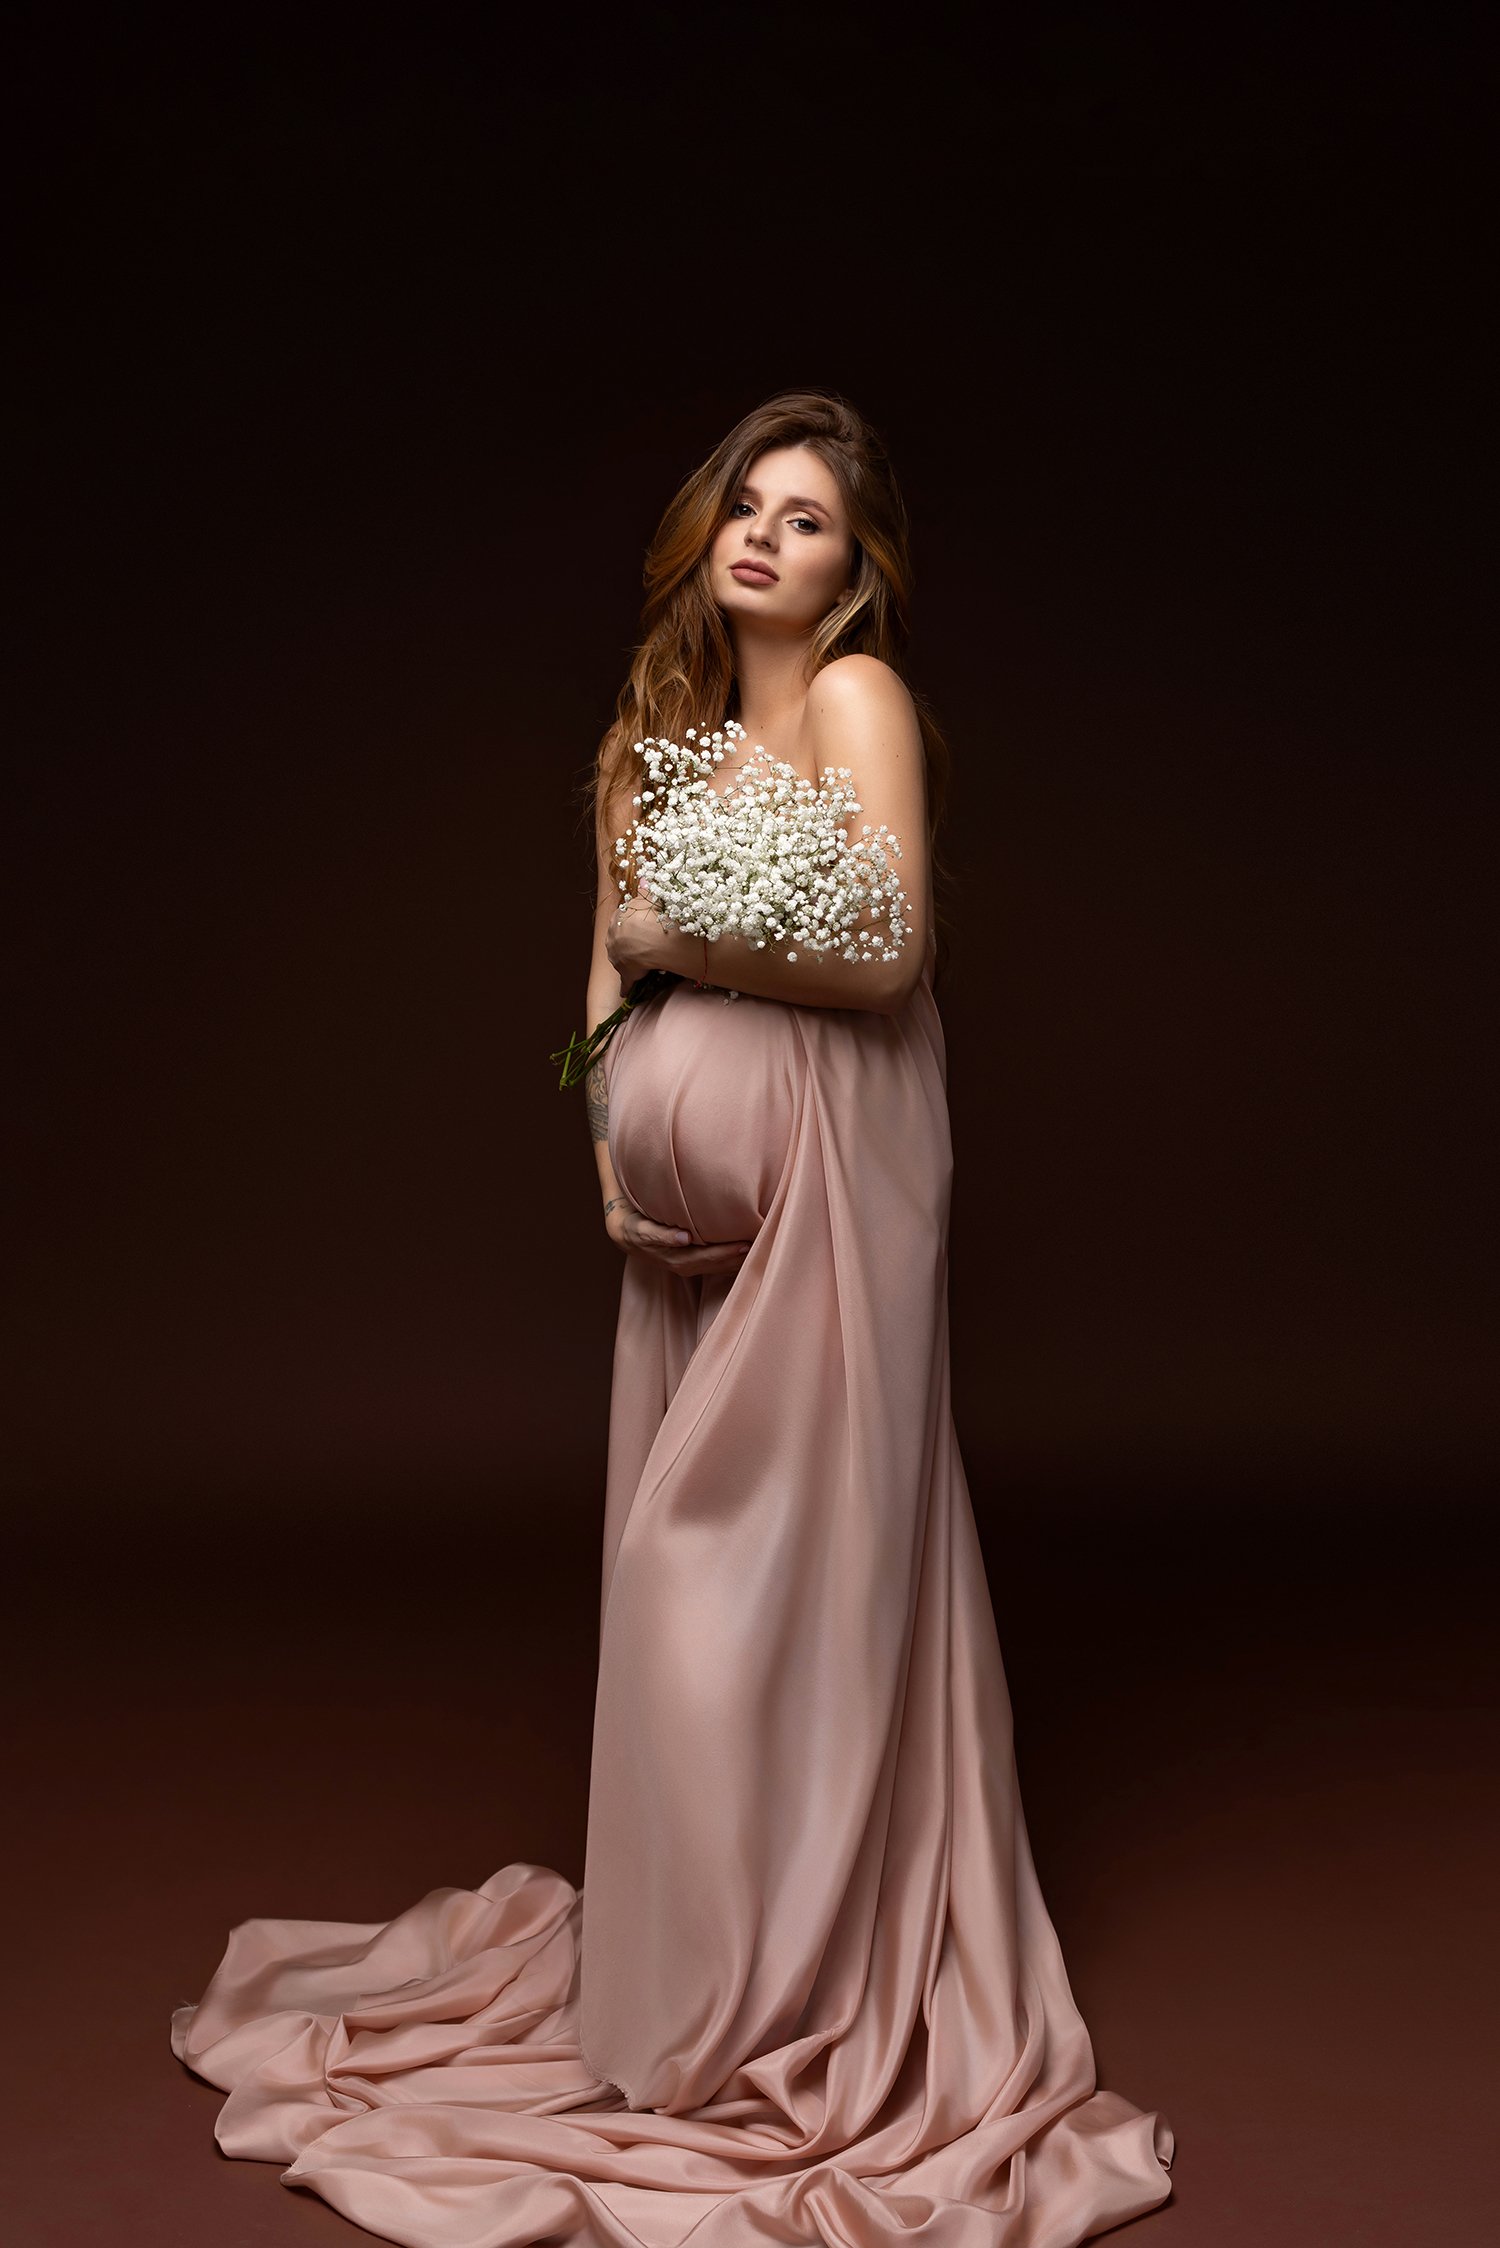 long-hair-pregnant-woman-maternity-photo-columbus-ohio-flowers-pink-silk-fabric-barebaby.jpg